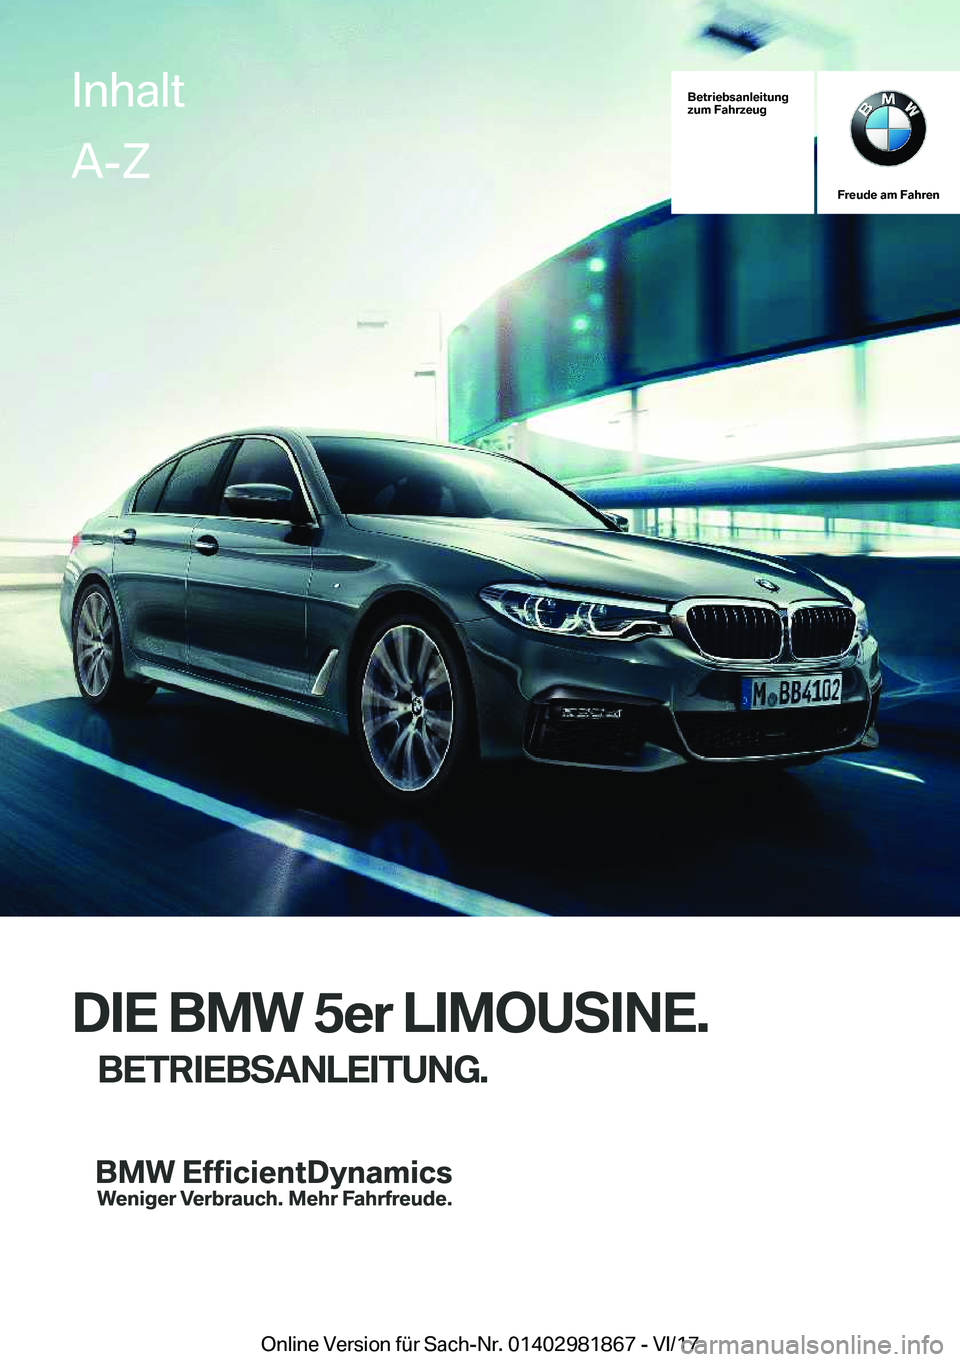 BMW 5 SERIES 2018  Betriebsanleitungen (in German) �B�e�t�r�i�e�b�s�a�n�l�e�i�t�u�n�g
�z�u�m��F�a�h�r�z�e�u�g
�F�r�e�u�d�e��a�m��F�a�h�r�e�n
�D�I�E��B�M�W��5�e�r��L�I�M�O�U�S�I�N�E�.
�B�E�T�R�I�E�B�S�A�N�L�E�I�T�U�N�G�.
�I�n�h�a�l�t�A�-�Z
�O�n�l